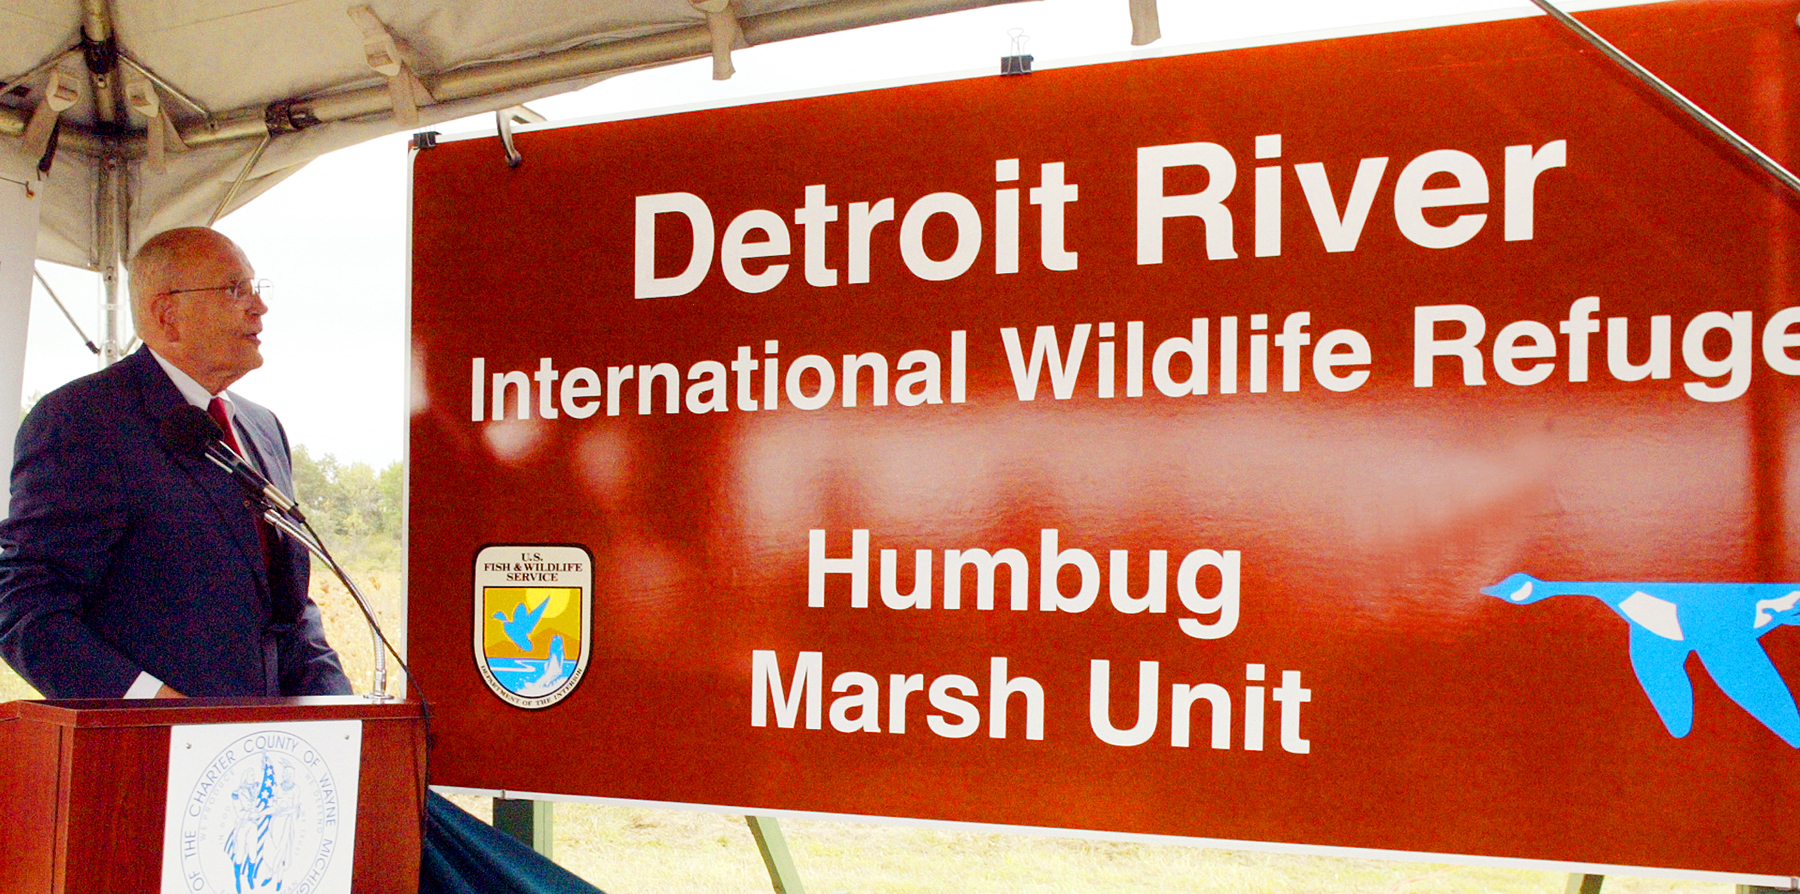 Photo by Detroit River International Wildlife Refuge via John Hartig